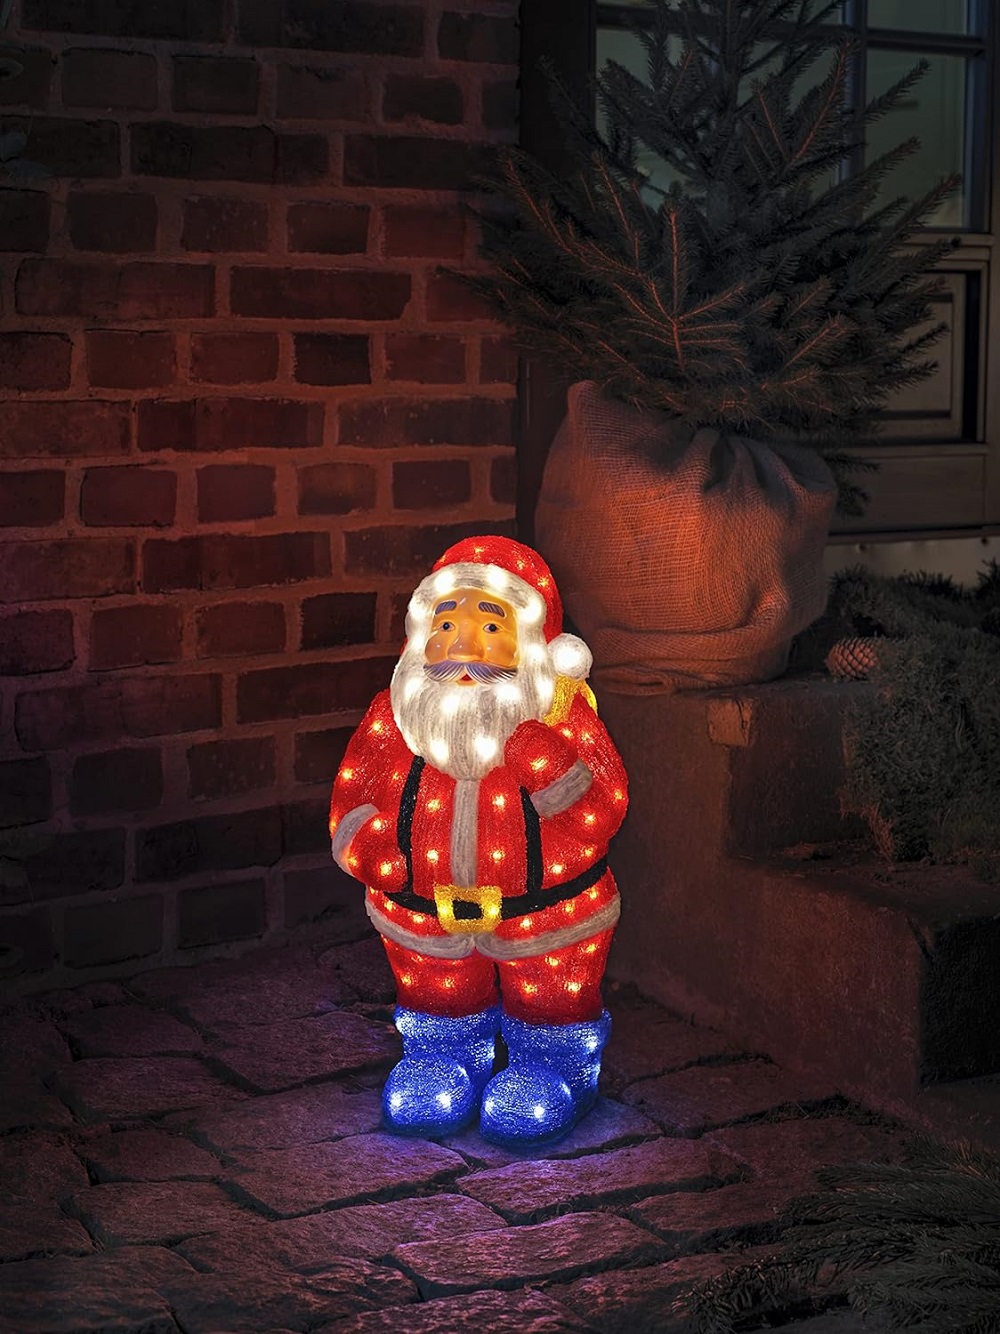 LED Acryl Weihnachtsmann 104er warmweiß 24V 55x28,5cm Konstsmide 6247-103 | Leuchtfiguren